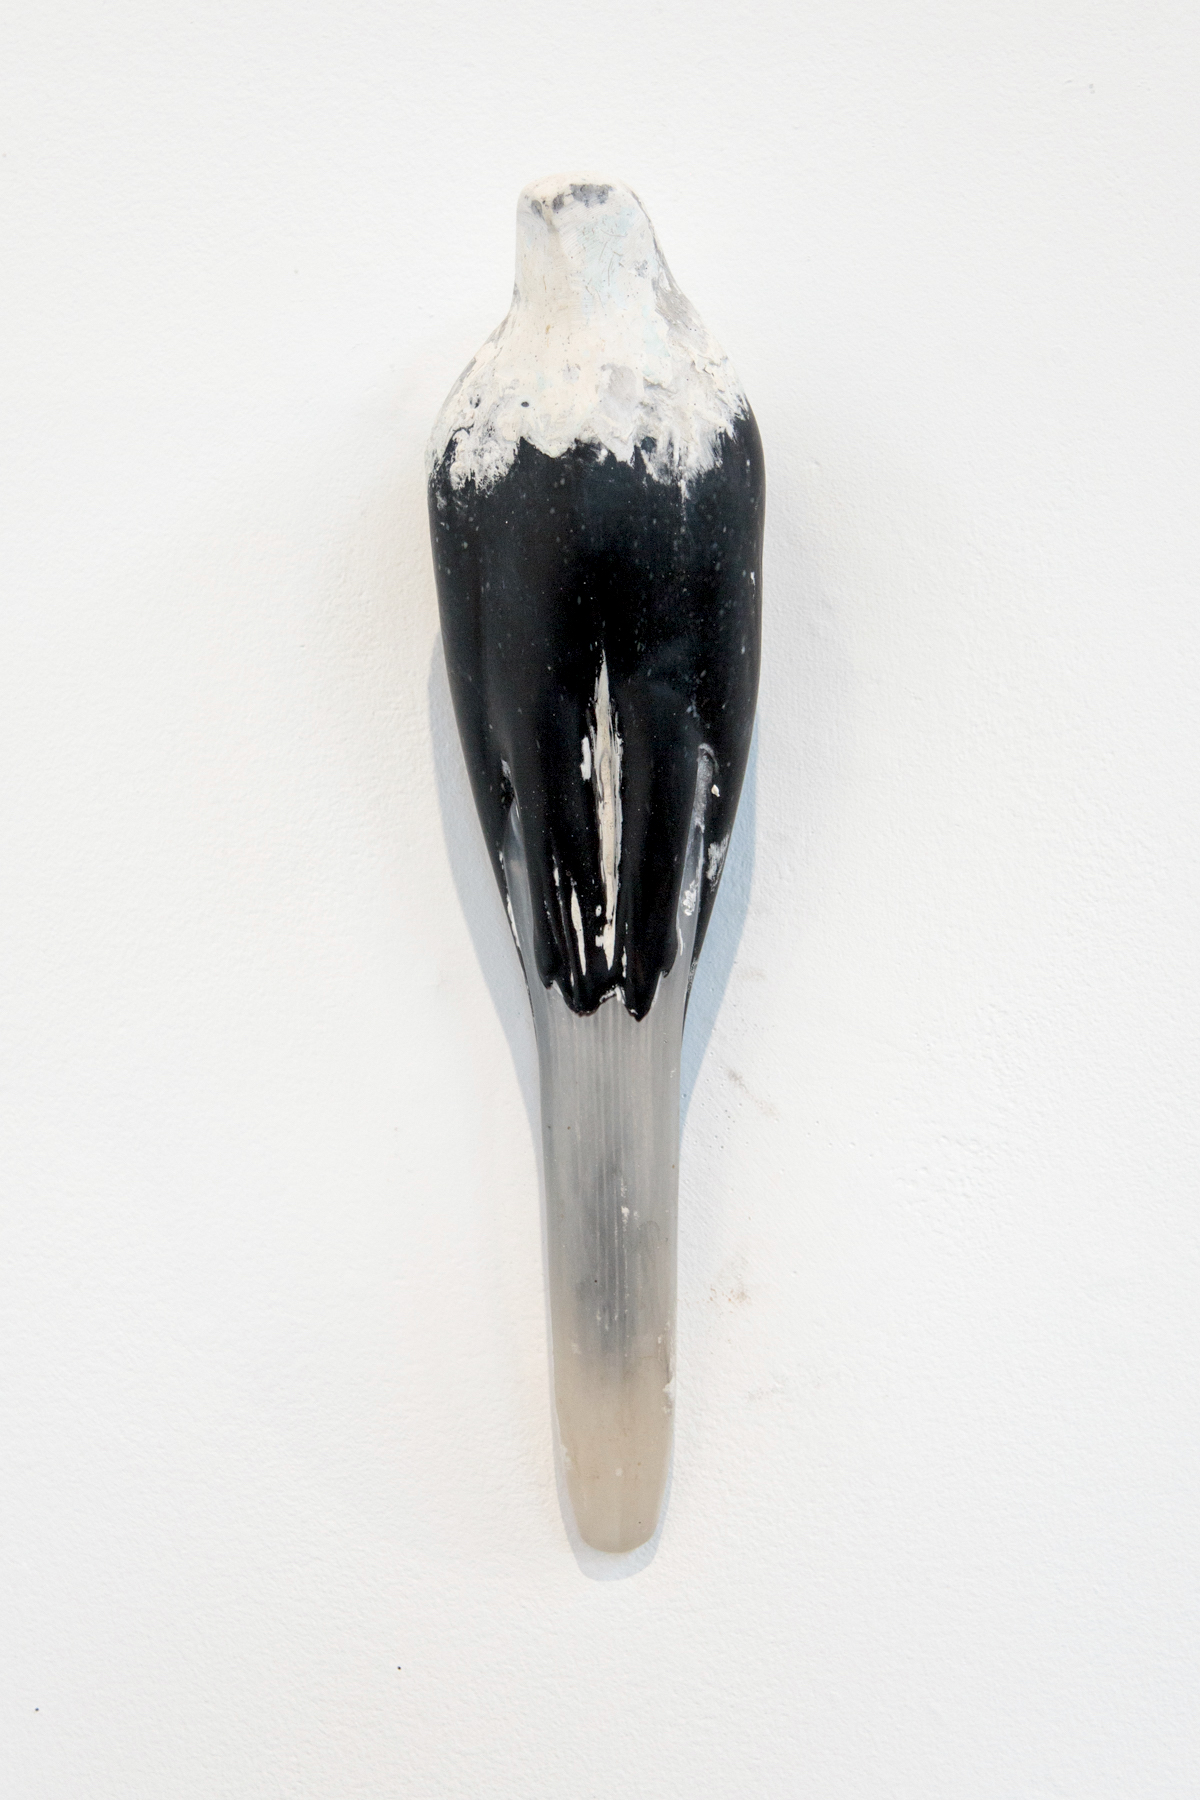  “Eagle Bird,” 2017&nbsp; Handblown pigmented glass and marble mix&nbsp; 15.5 x 14 x 3 inches 